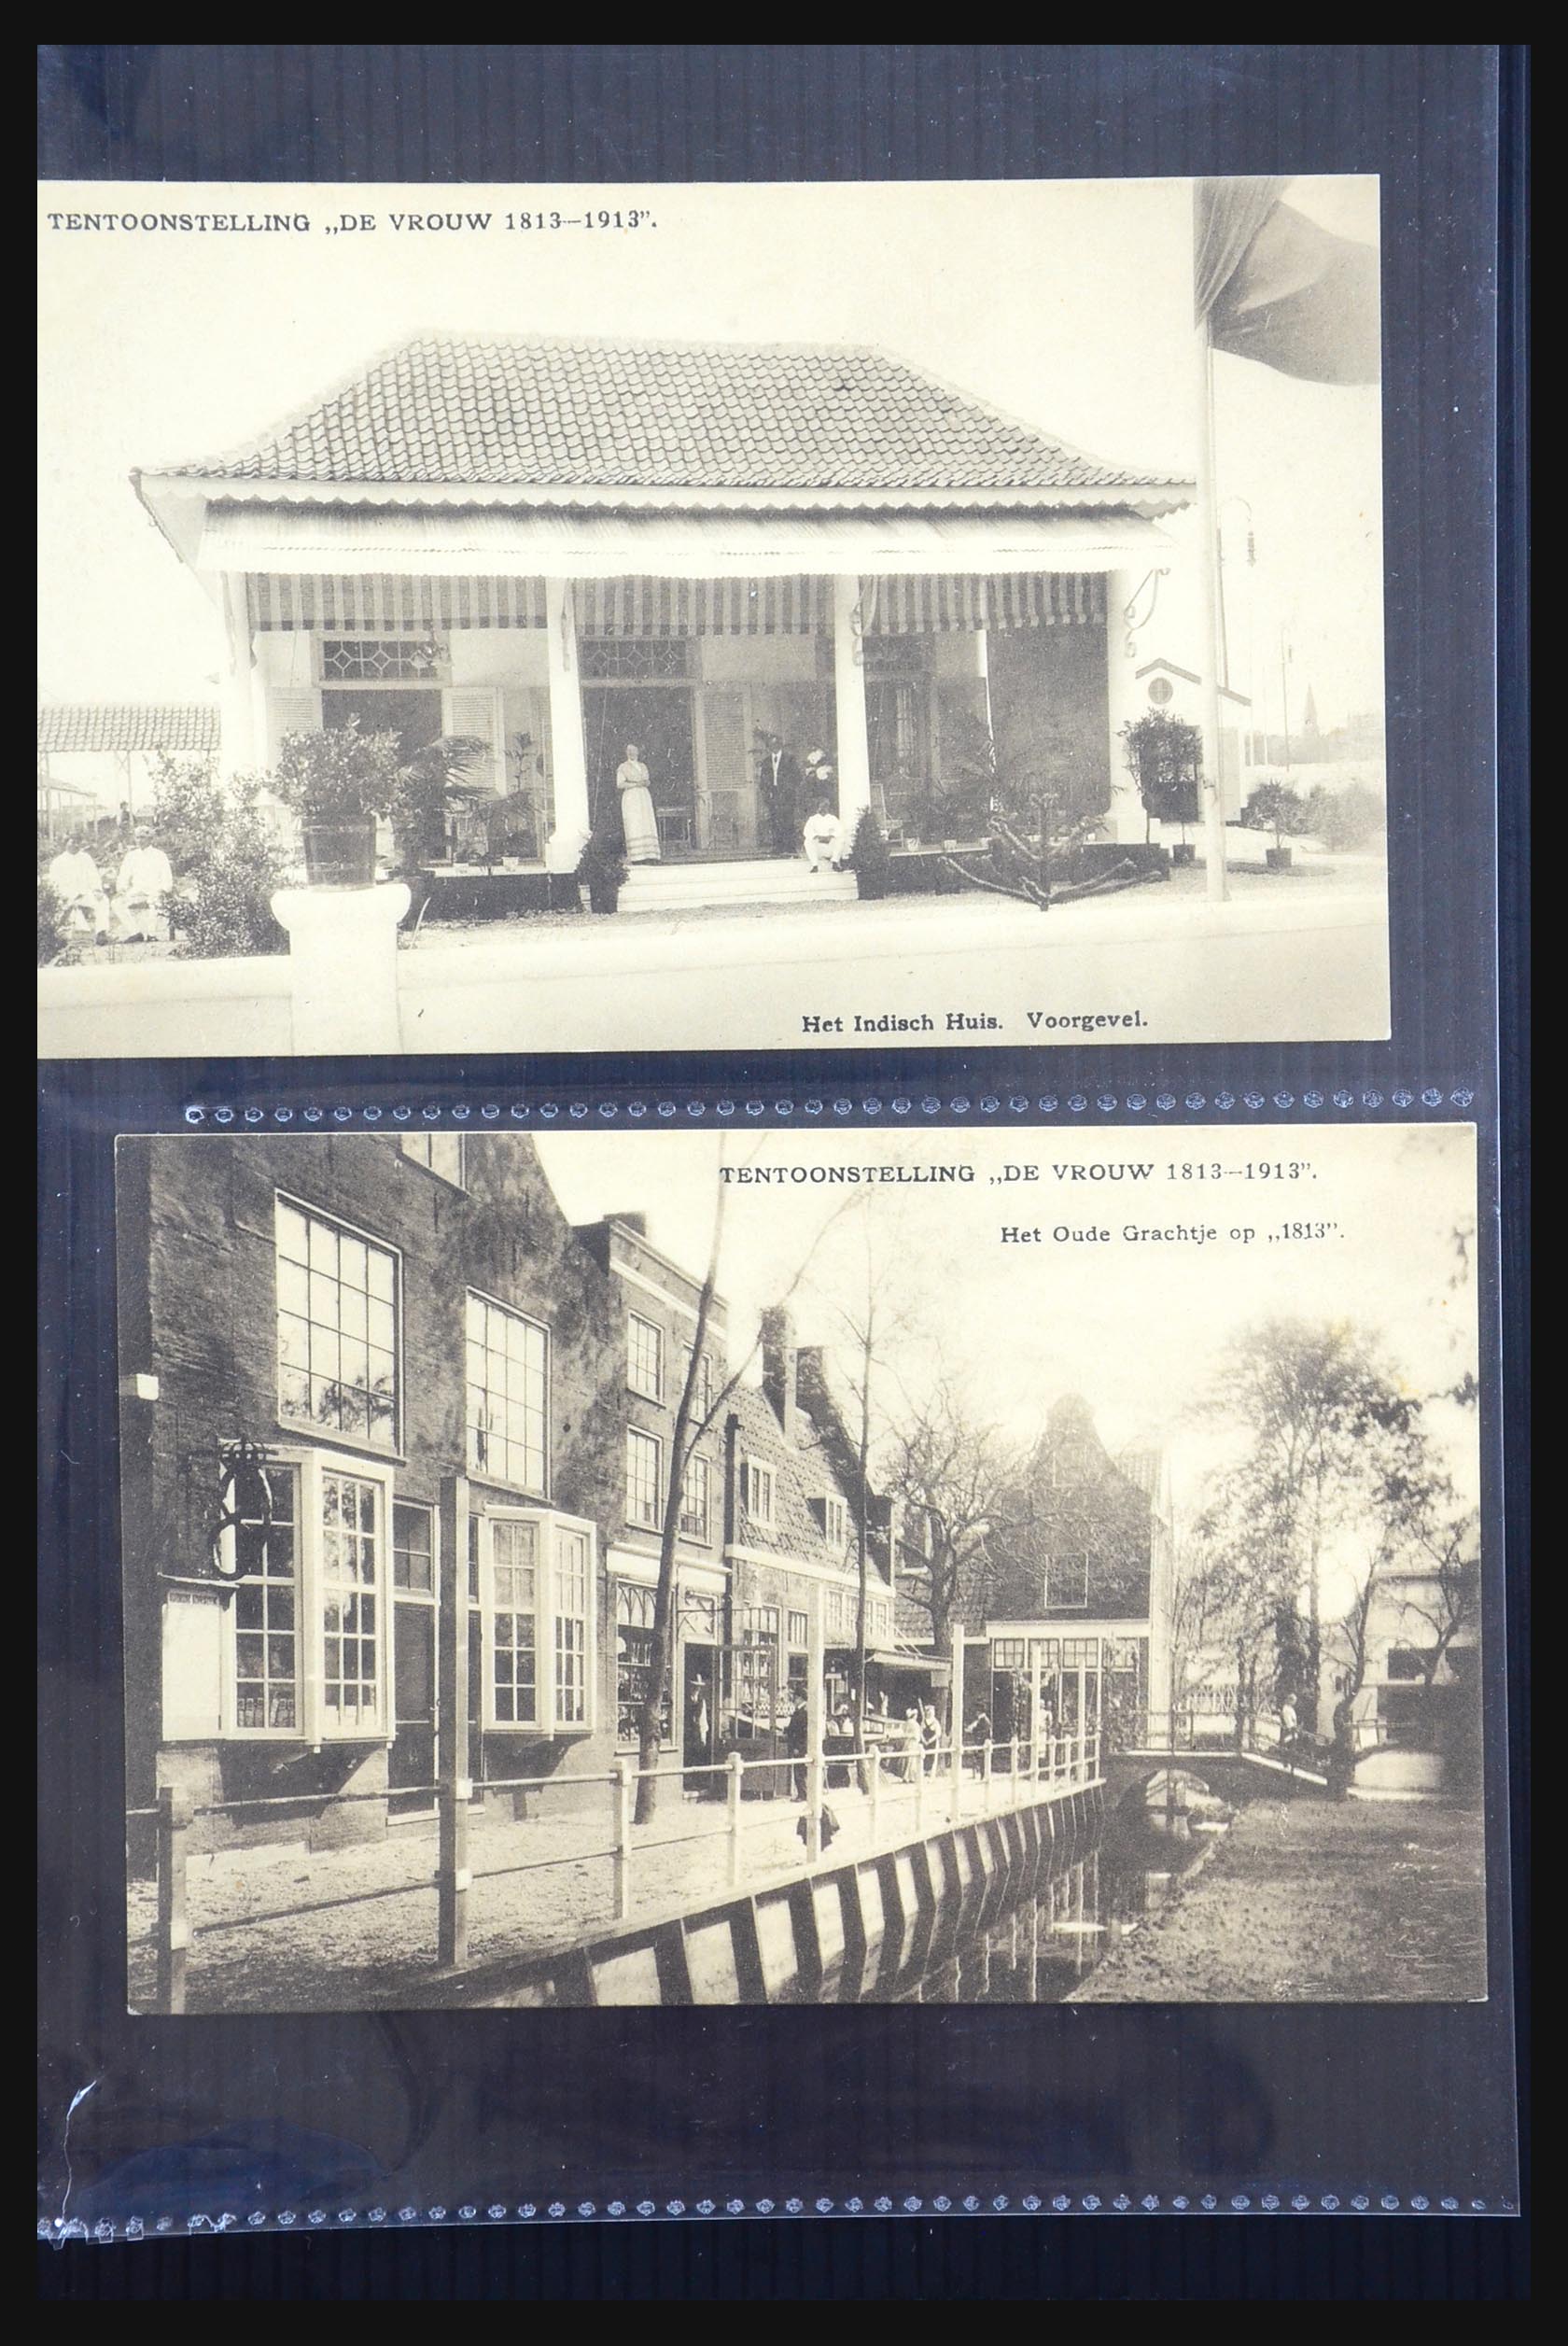 31338 437 - 31338 Netherlands picture postcards 1897-1914.